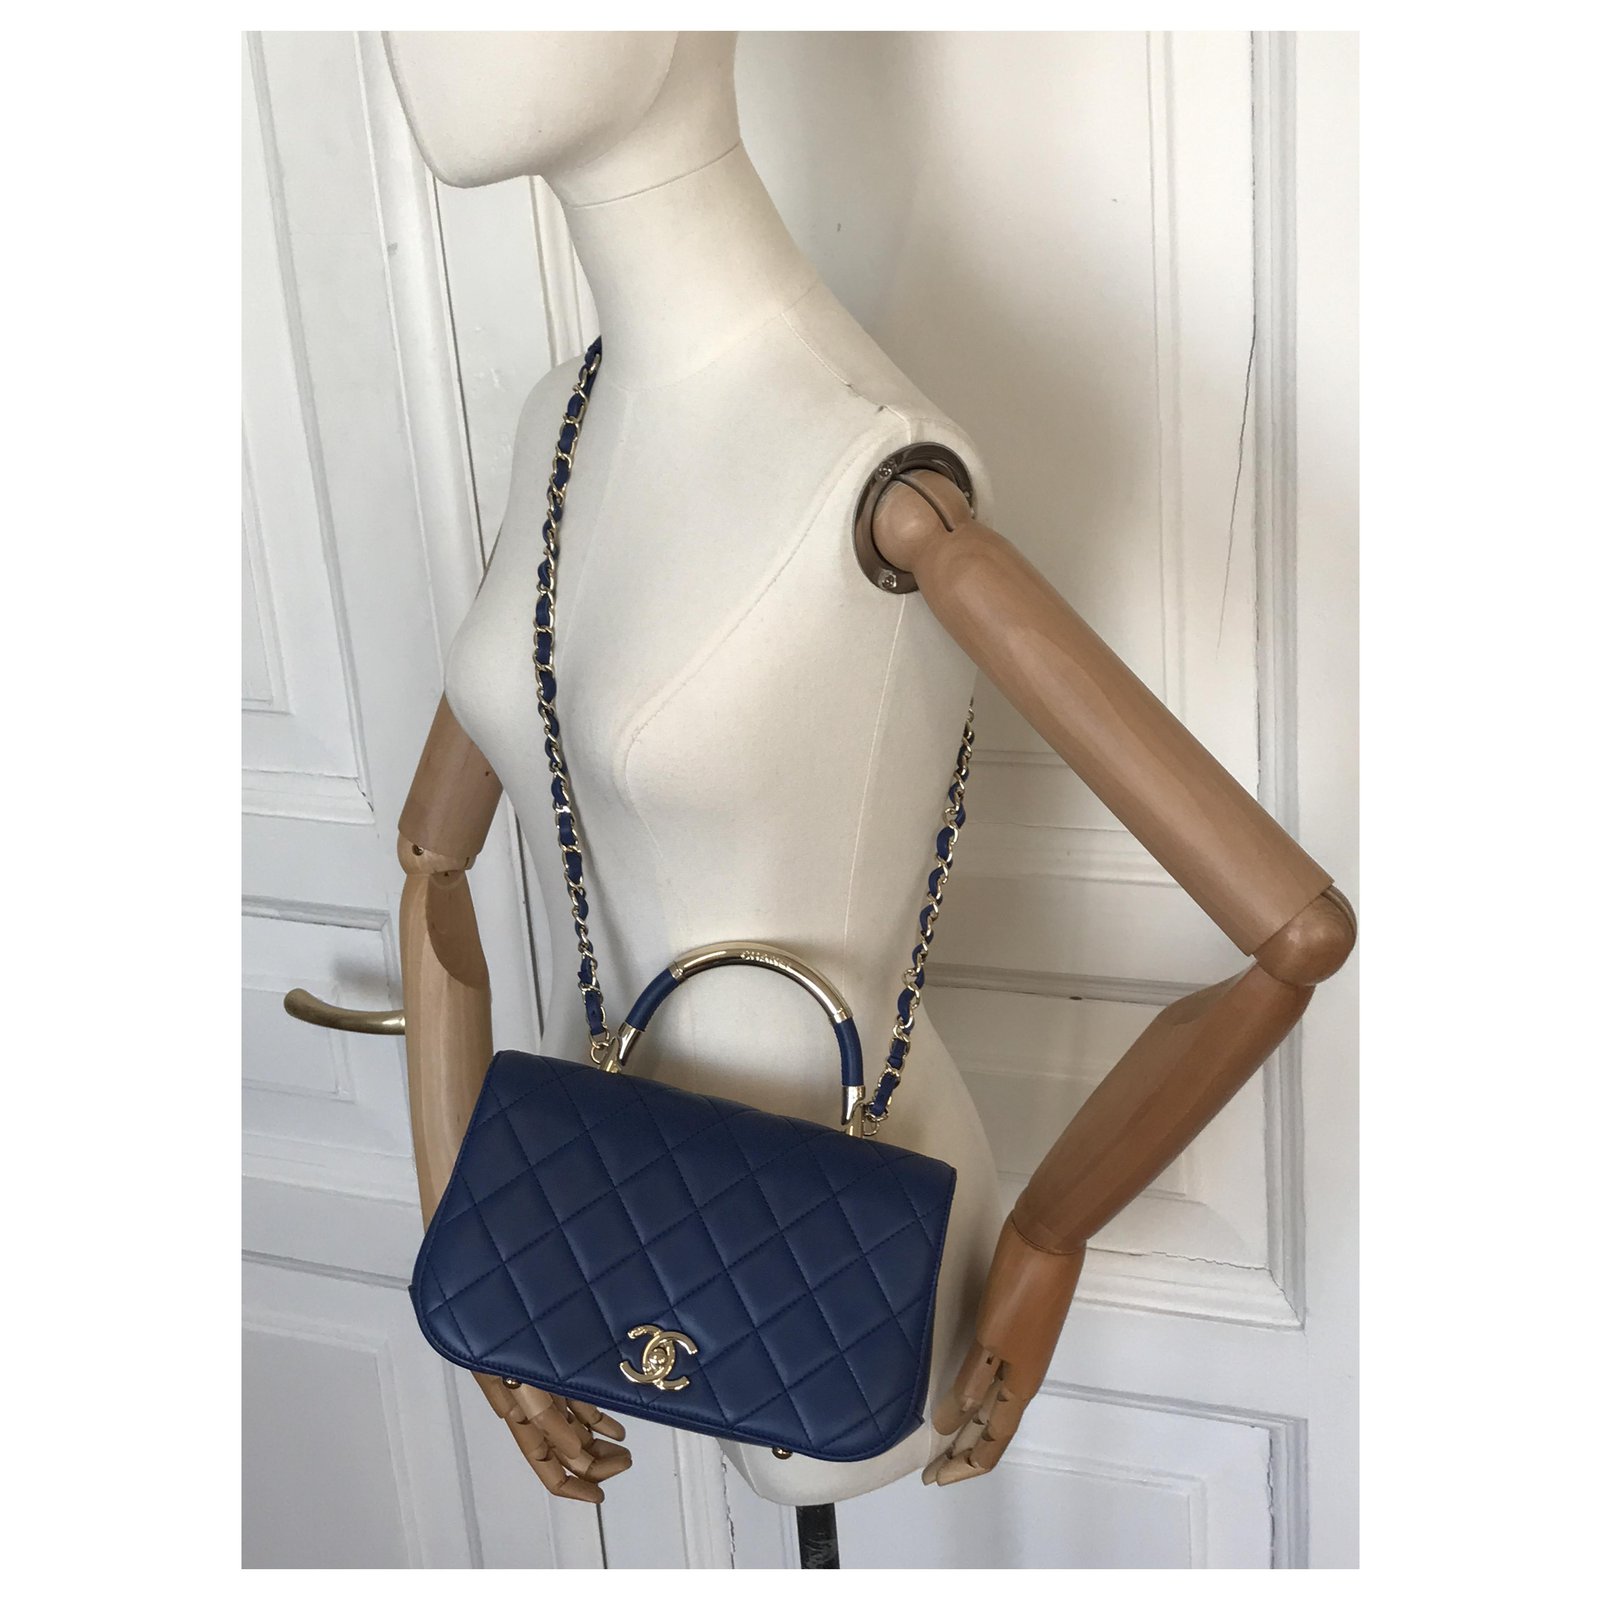 A bag by Chanel, Grand sac à rabat avec poignée 2017. - Bukowskis